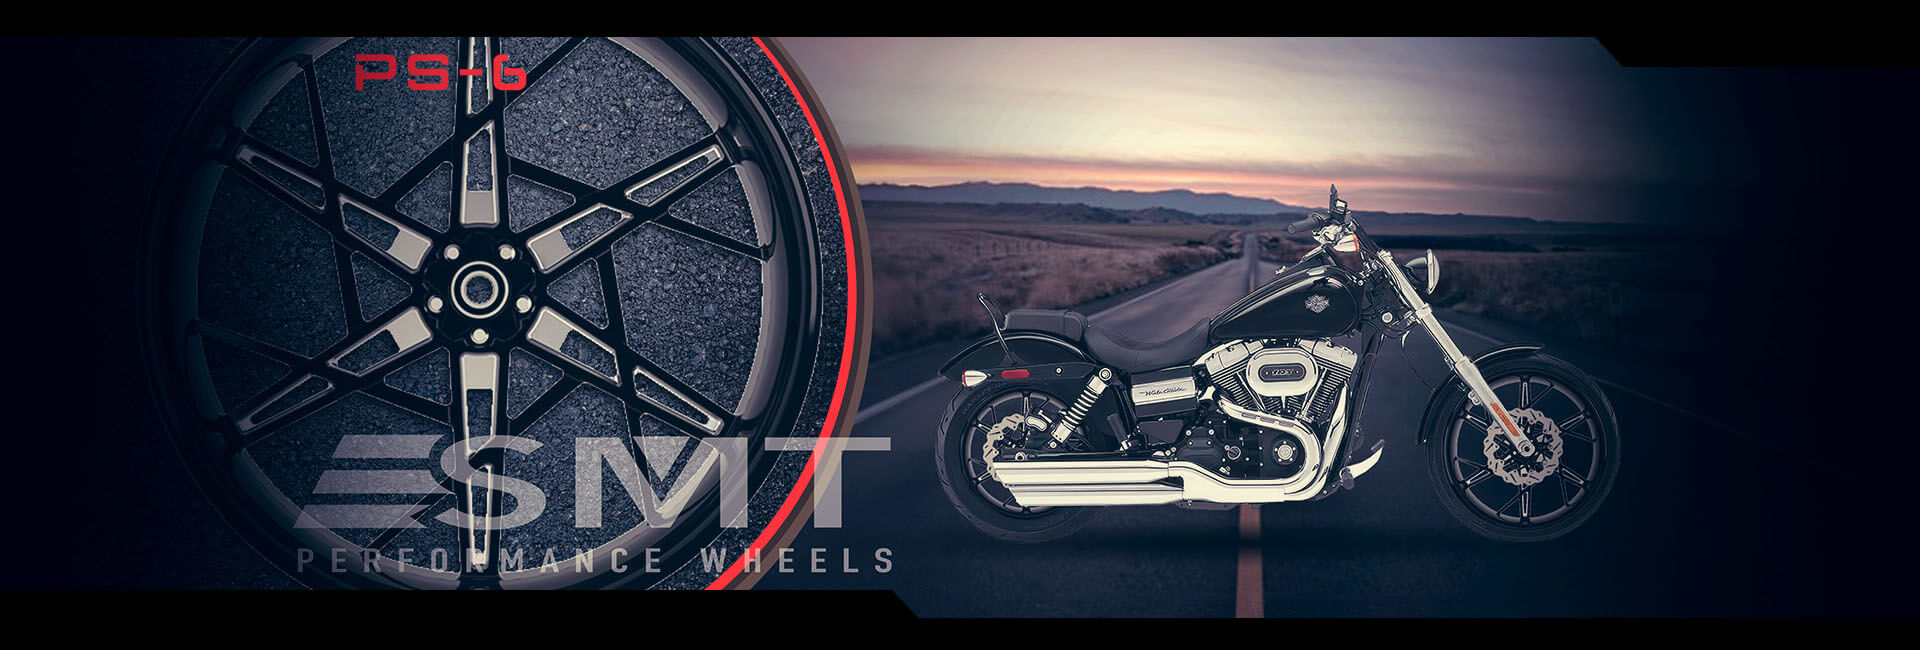 Custom Harley Low Rider Wheels From SMT